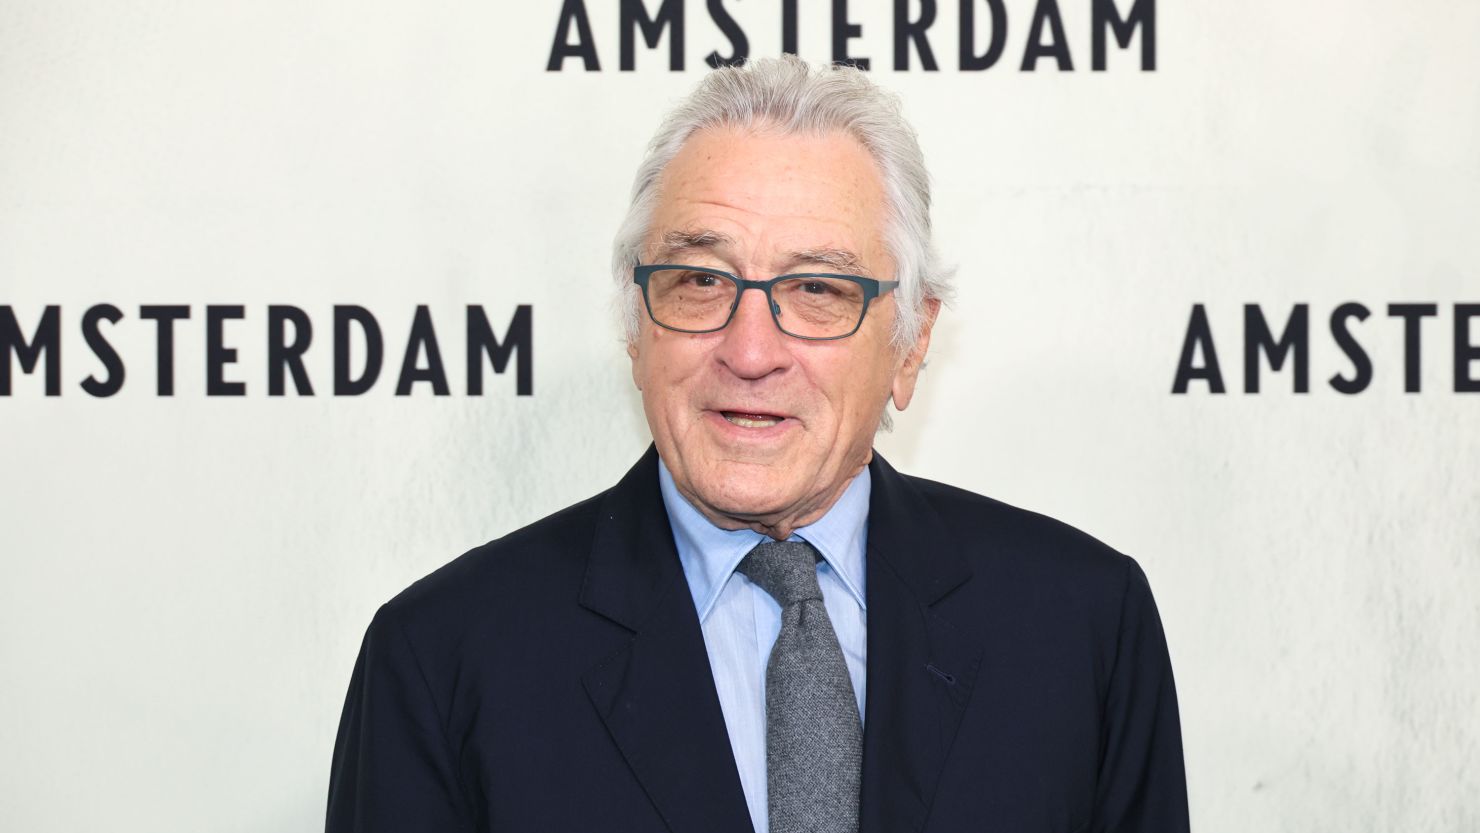 Robert De Niro at the 'Amsterdam' premiere in 2022 in New York City.